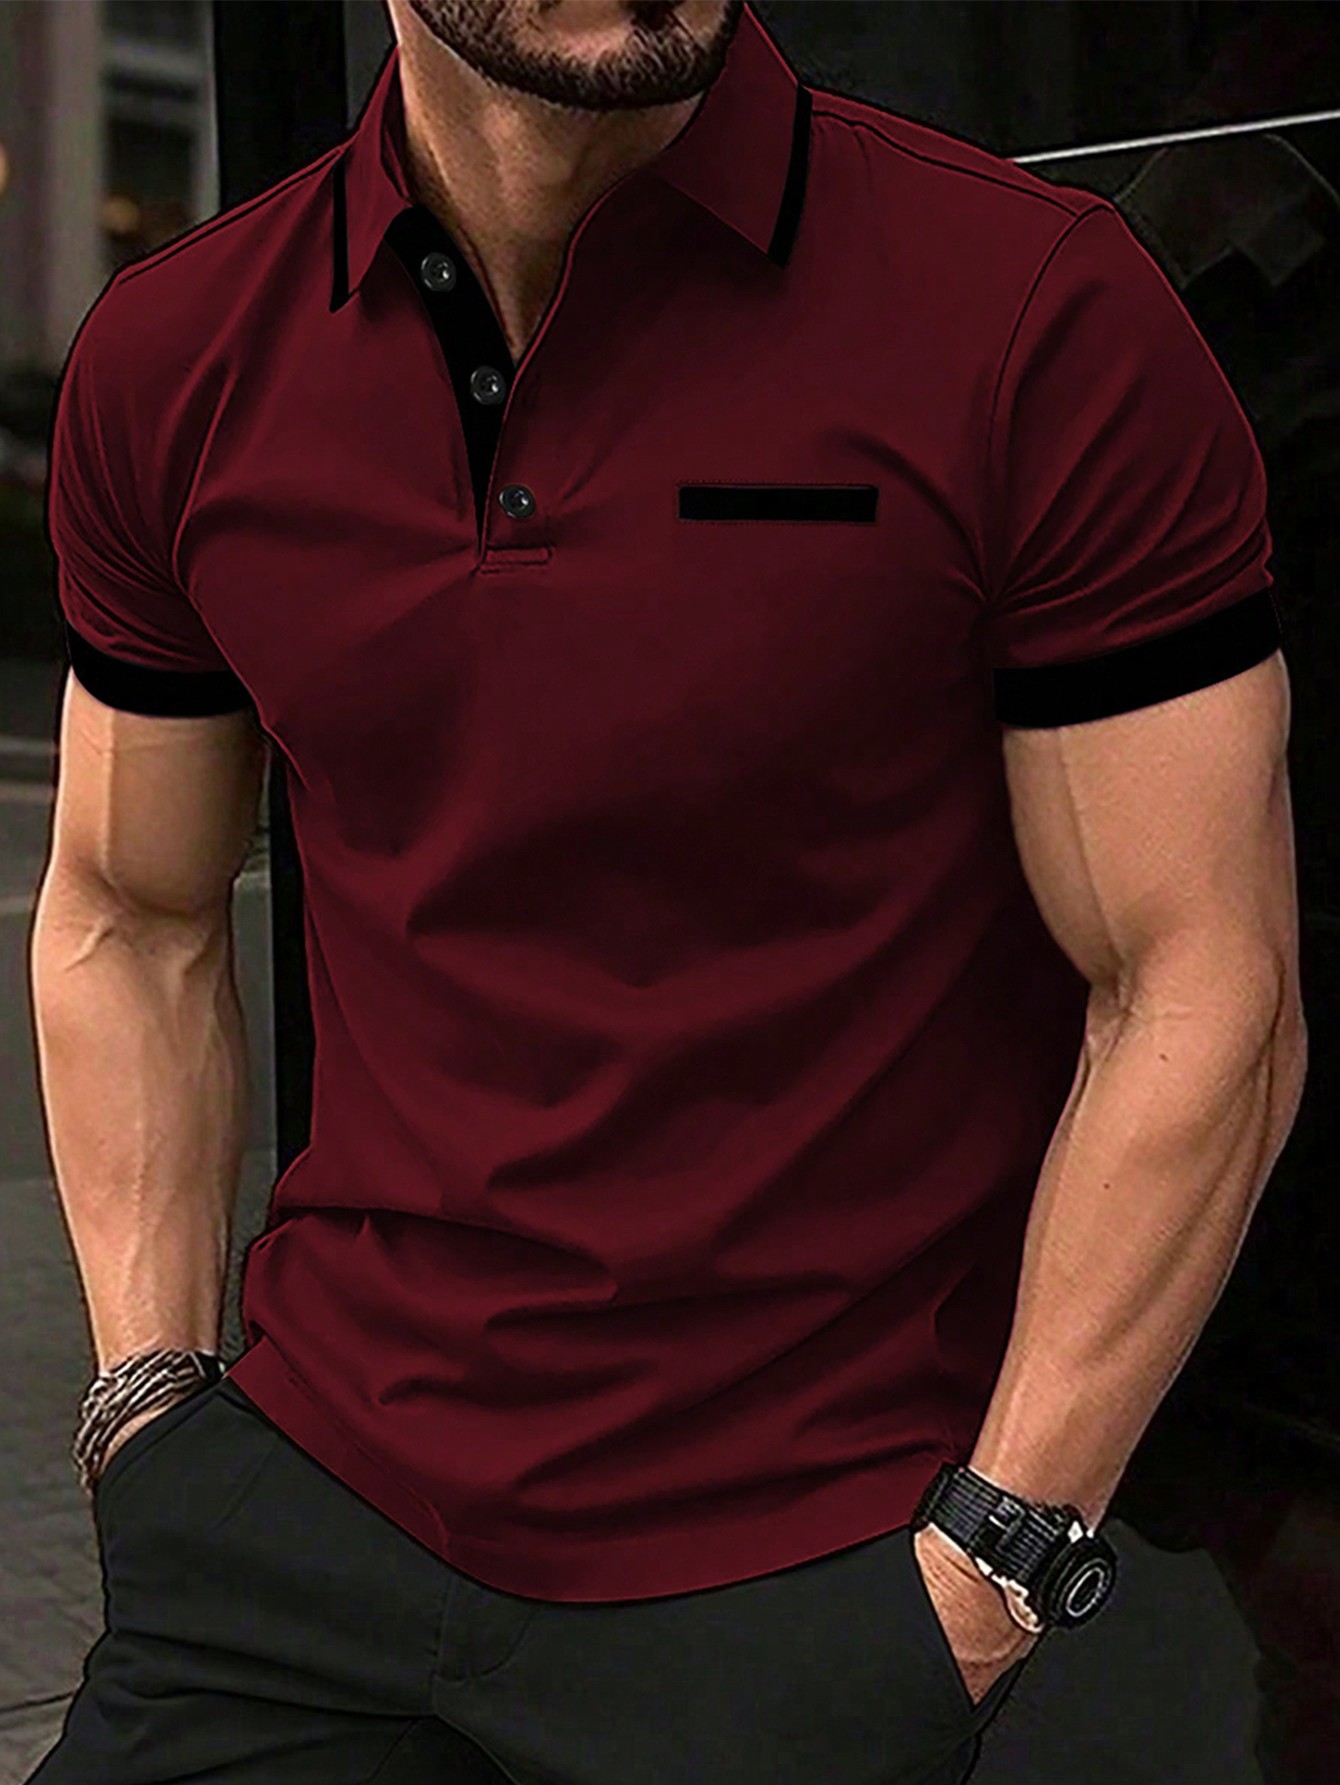 Мужская рубашка-поло контрастного цвета Manfinity Homme, бургундия мужская рубашка поло контрастного цвета manfinity homme хаки